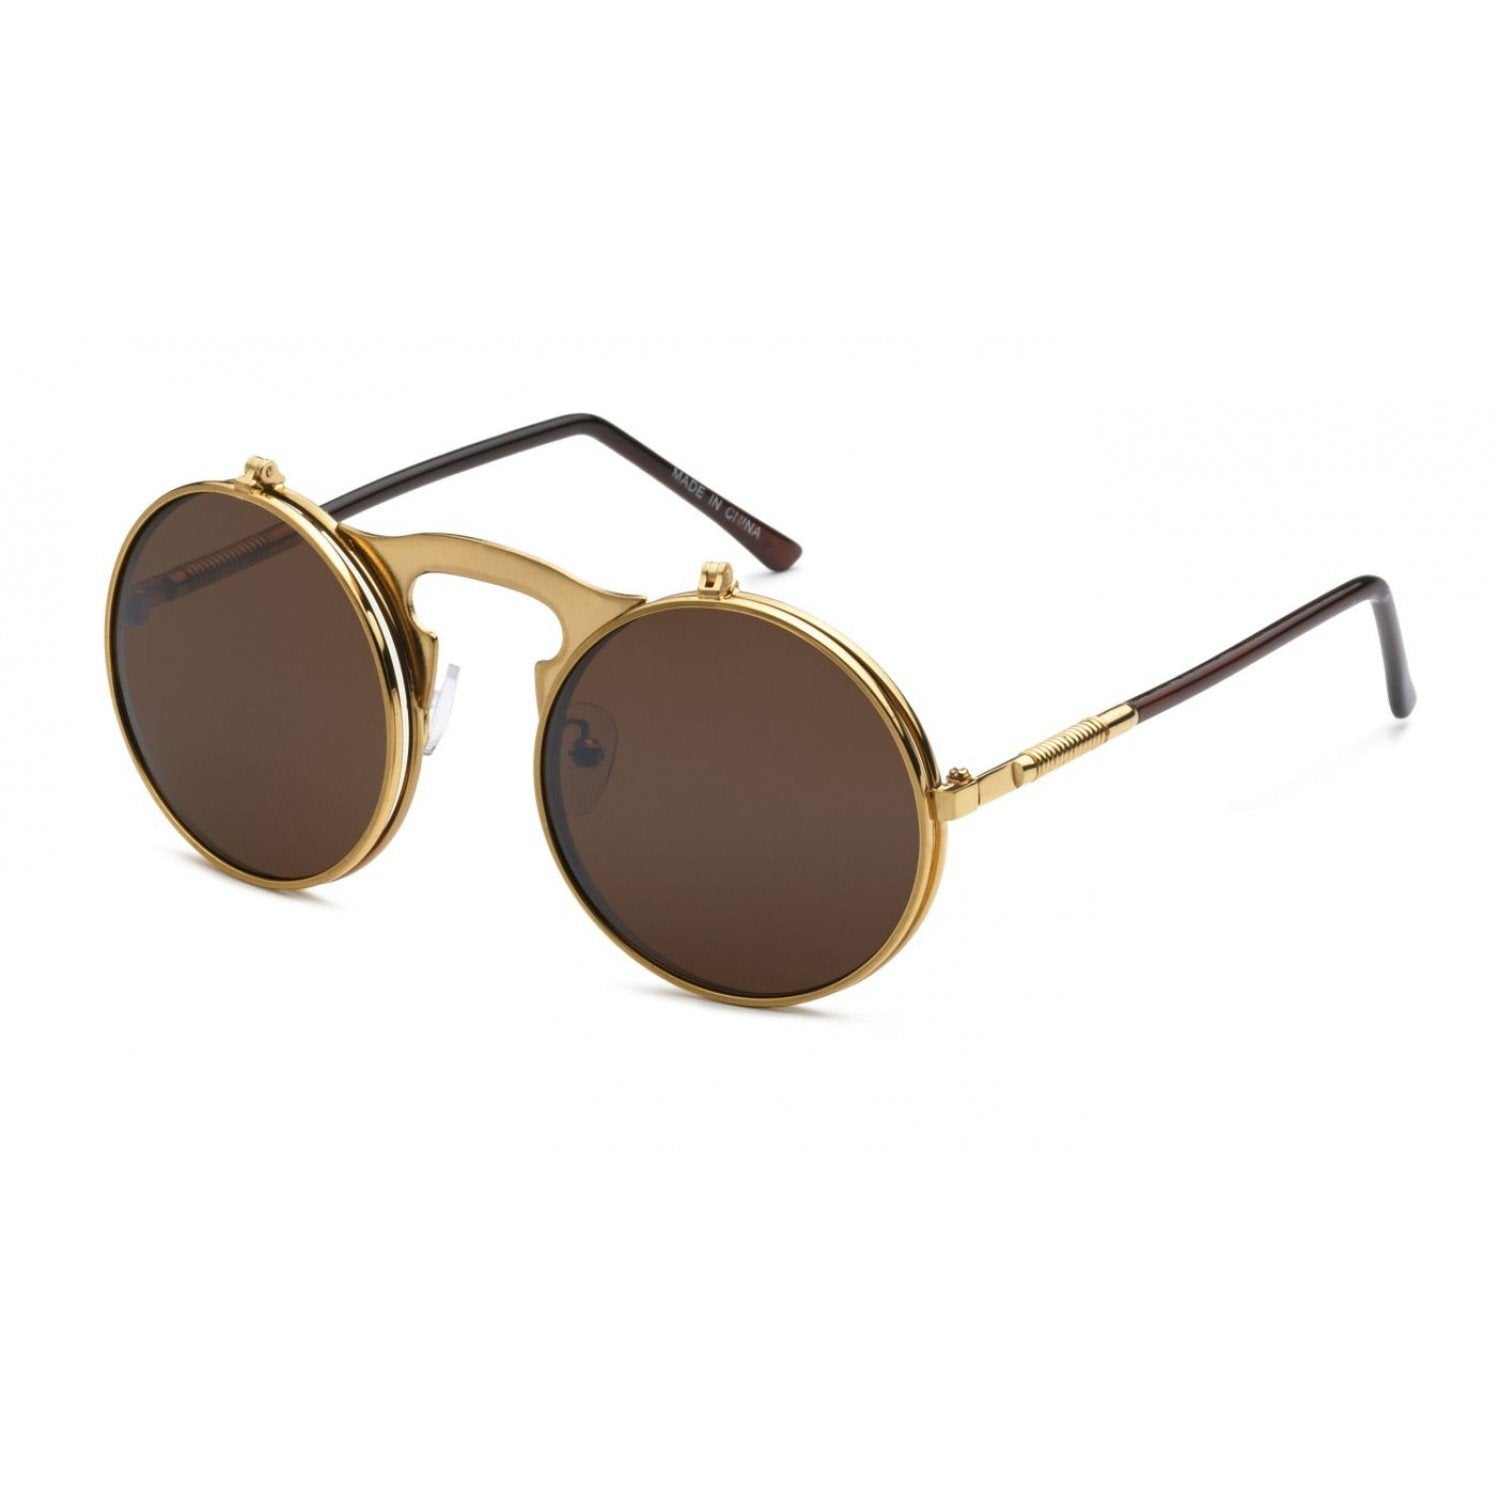 "90's Vibe" Round Flip Up Sunglasses - Weekend Shade Sunglasses